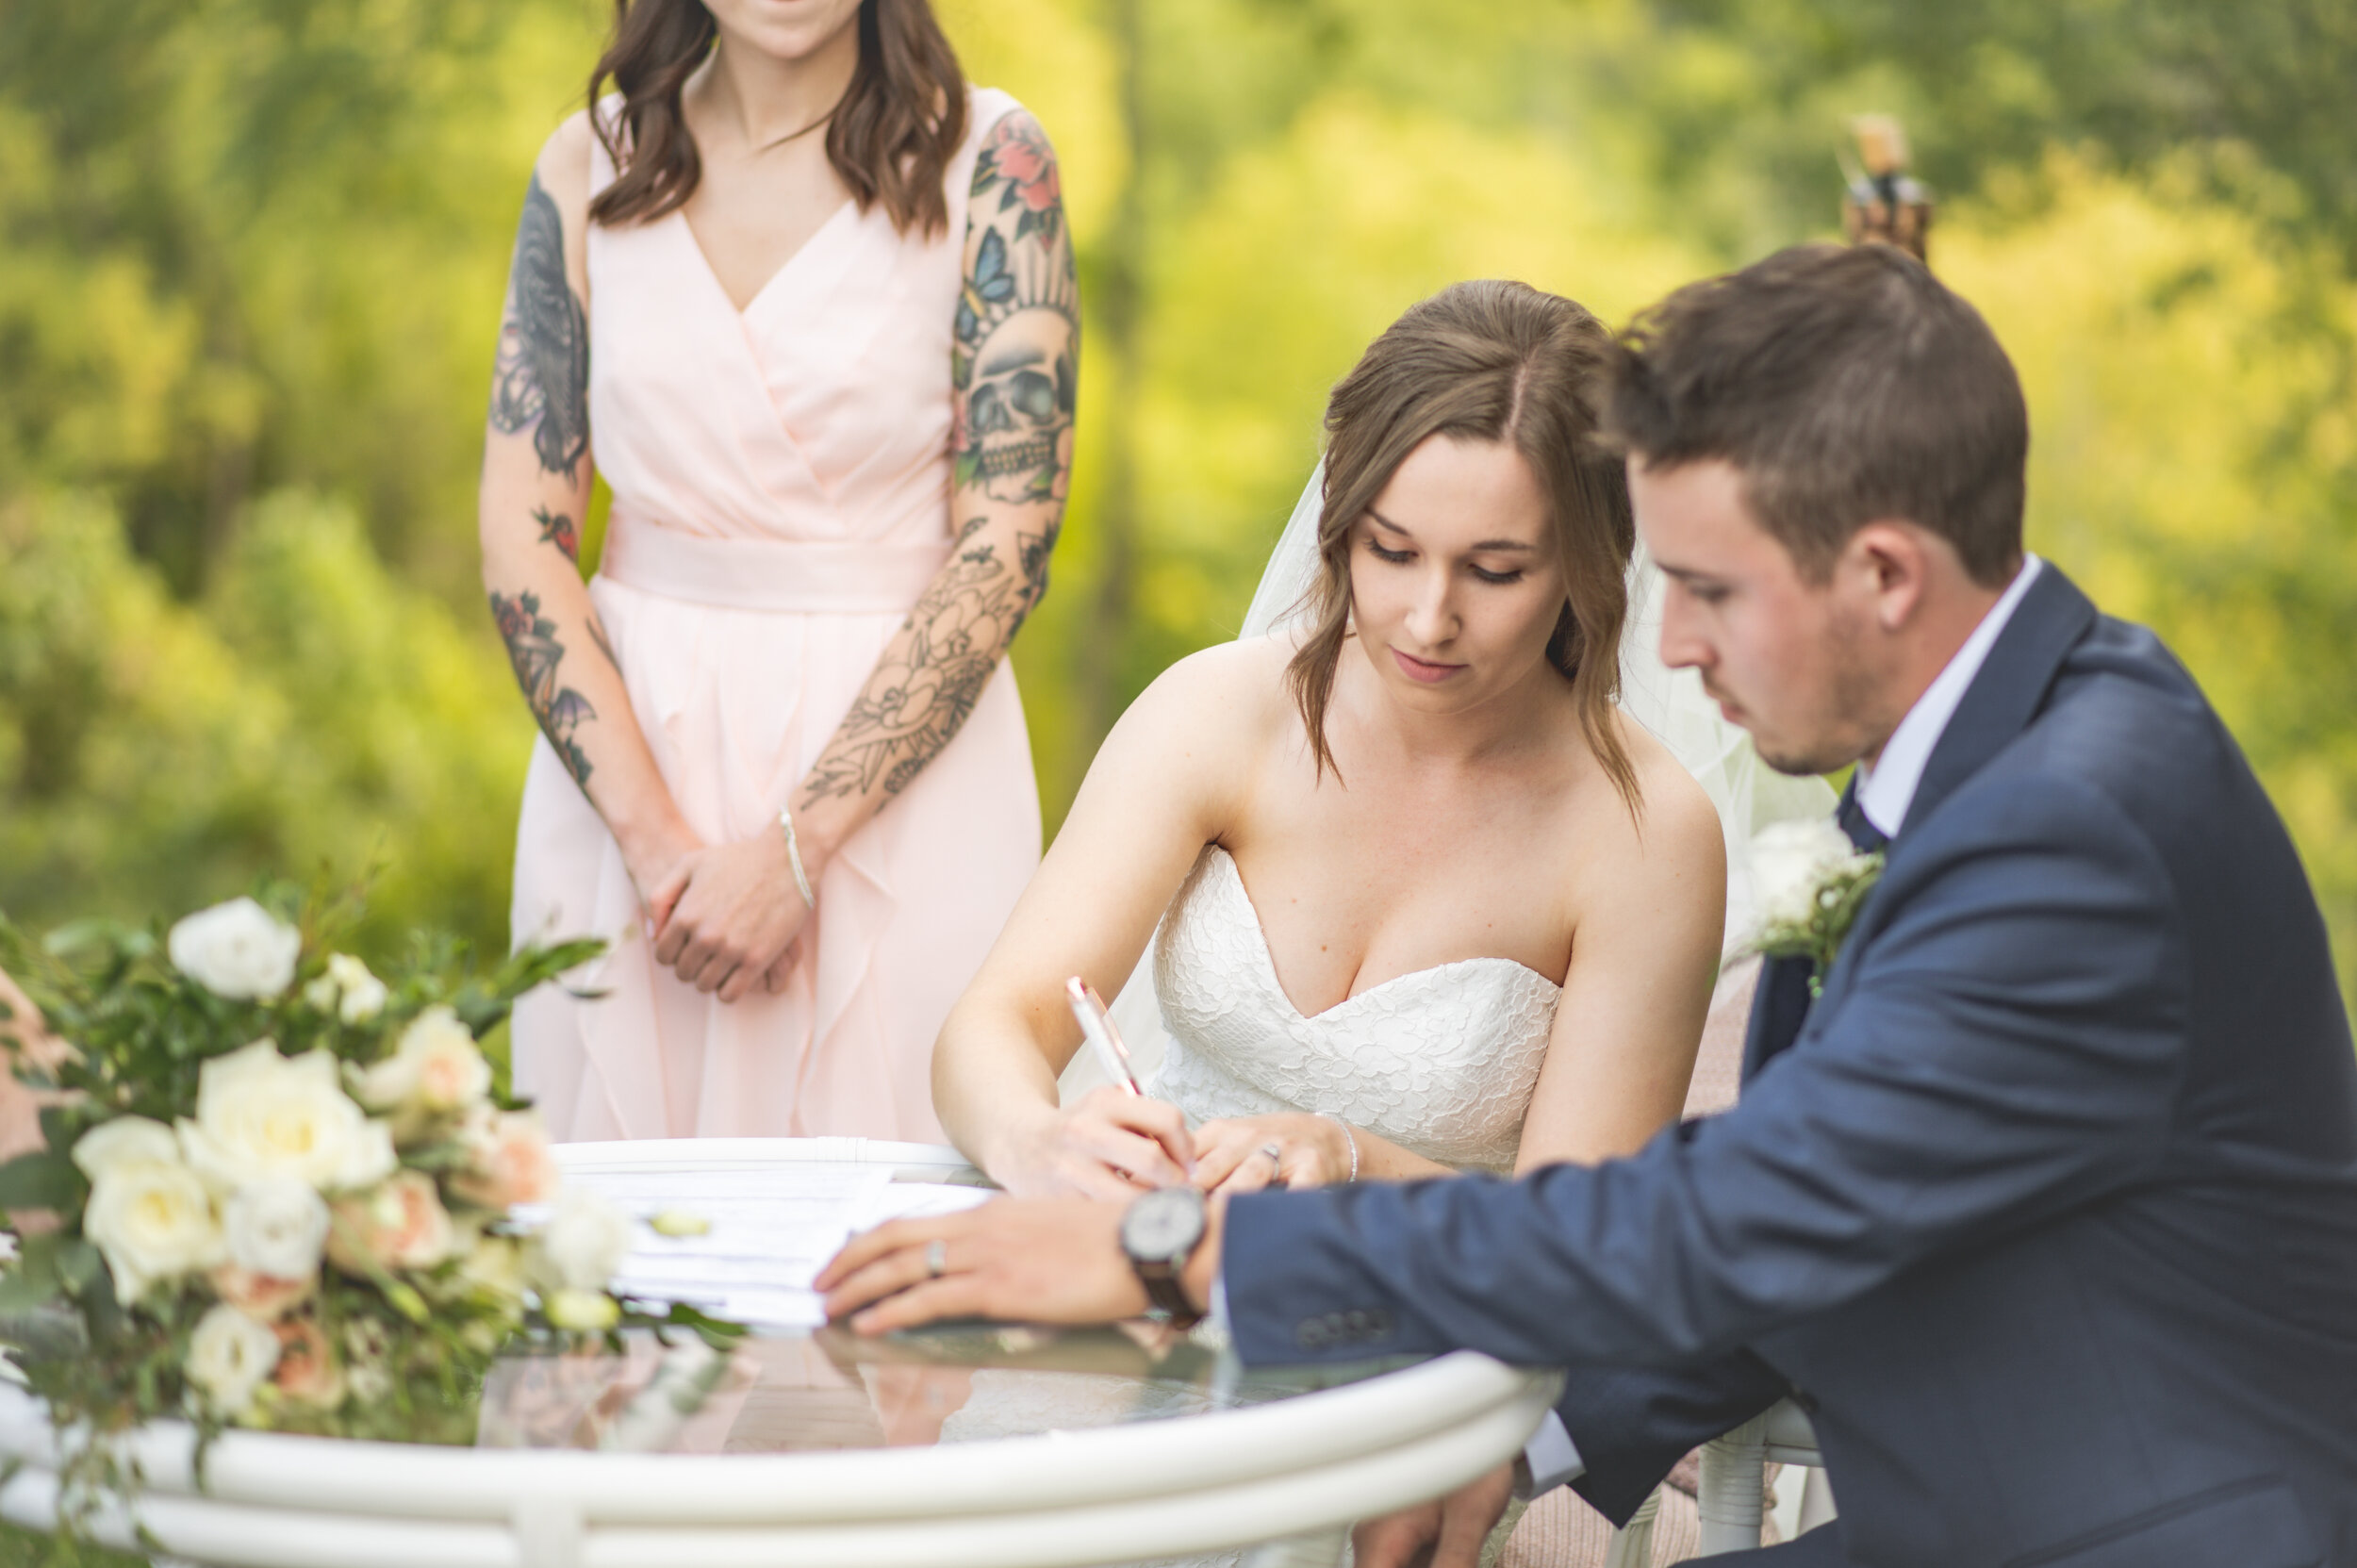 Signing the Wedding License - eTangPhotography.com